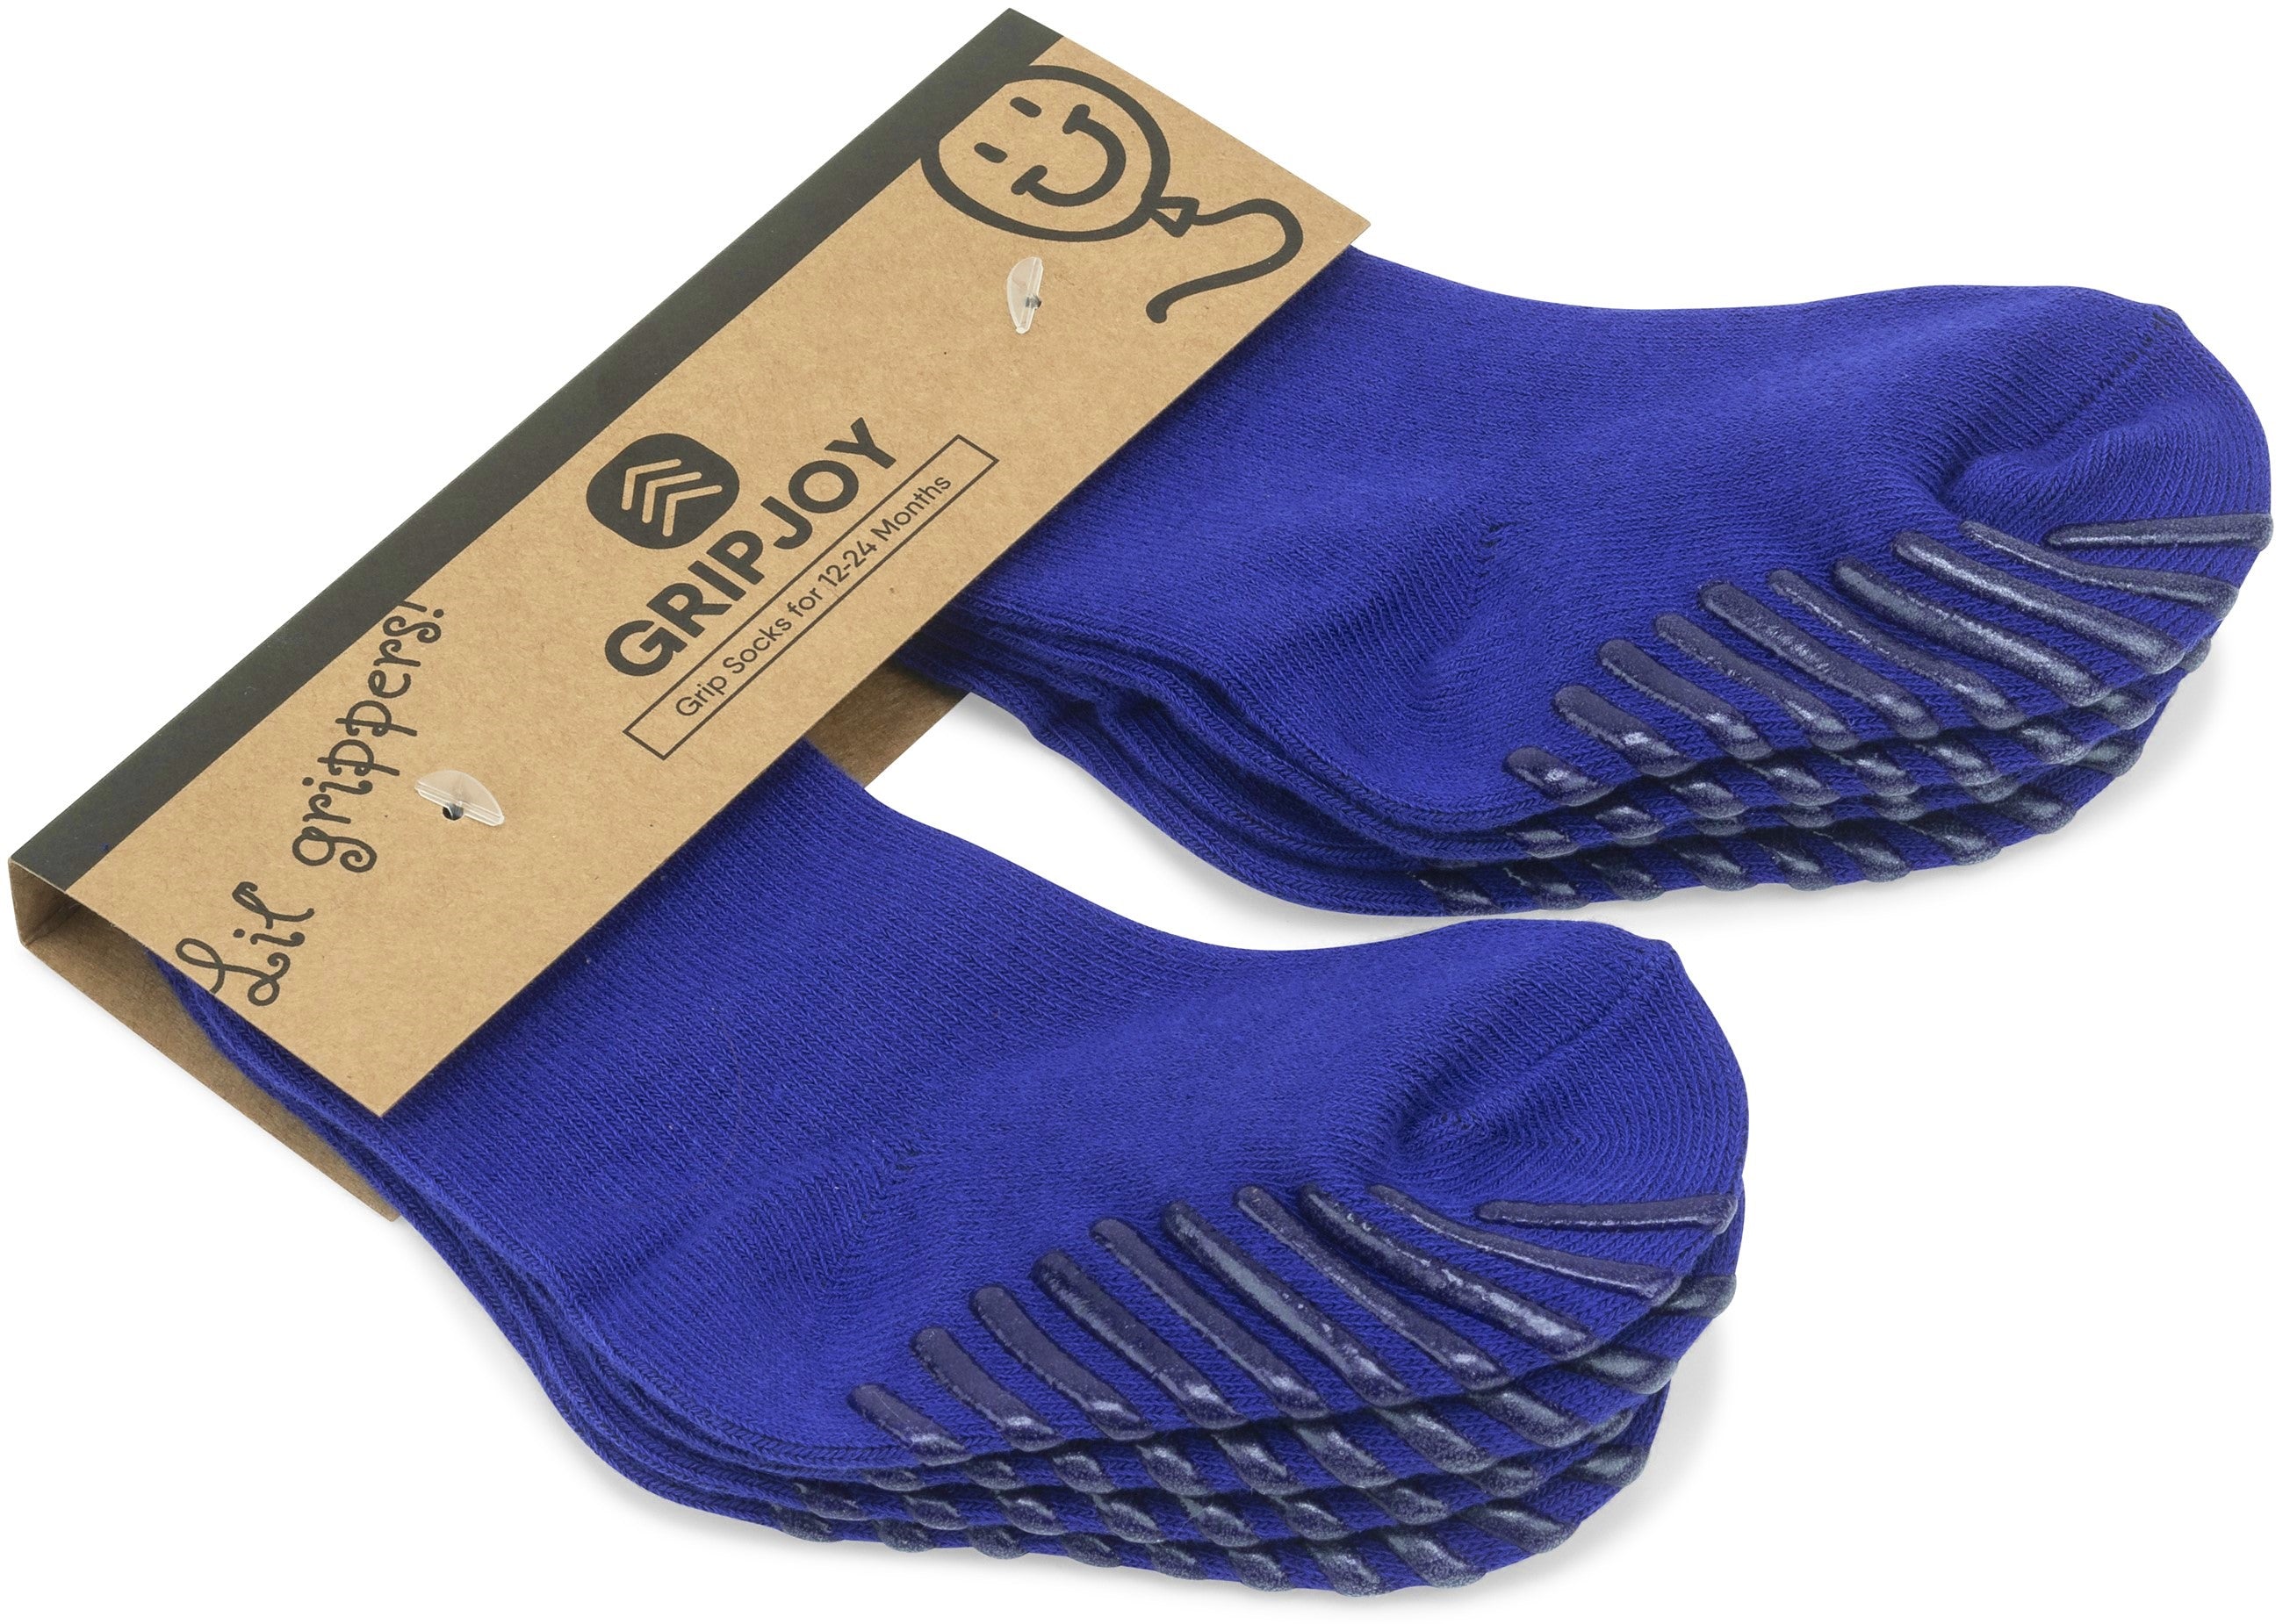 Women's Black/Grey Diabetic Socks with Grippers x3 Pairs - Gripjoy Socks